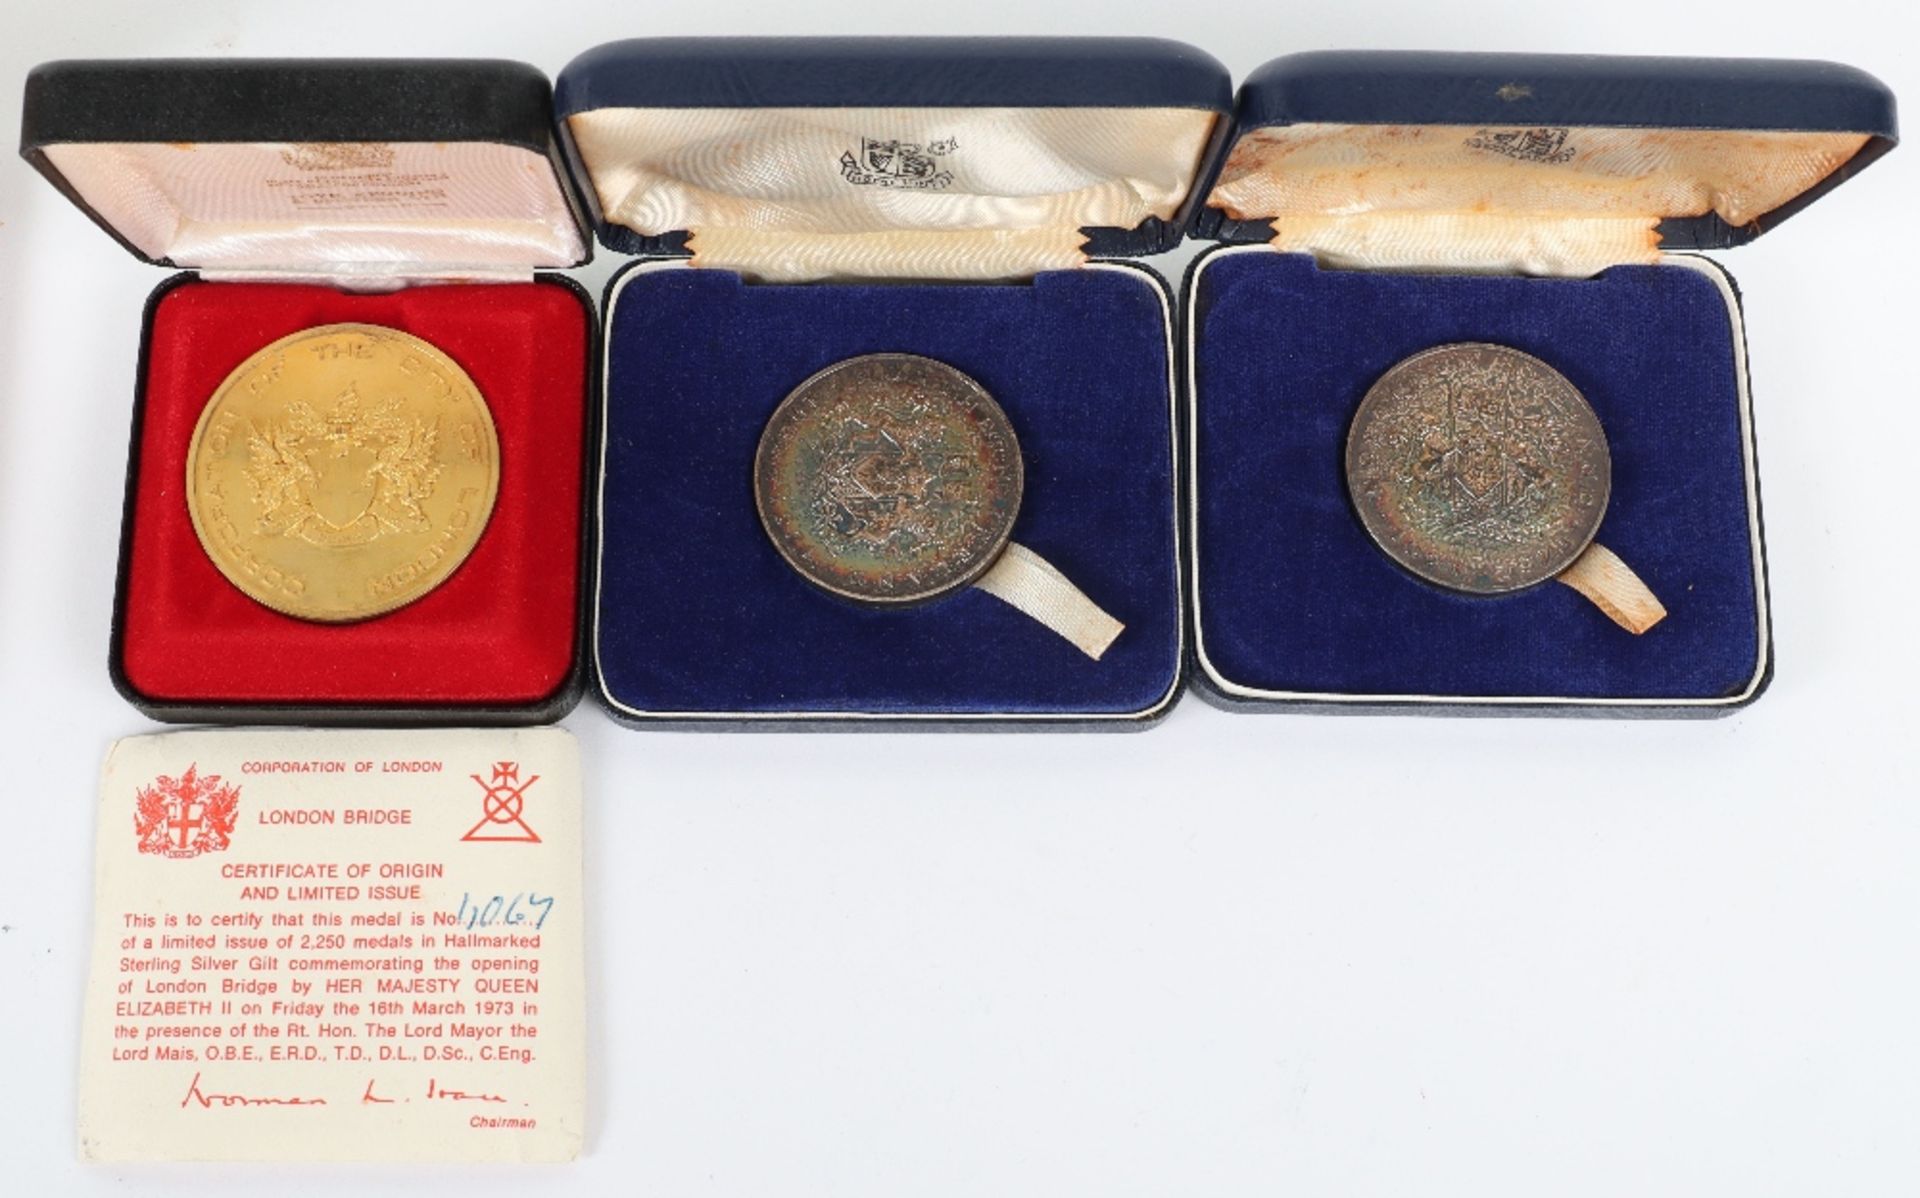 Prince of Wales Caernareon 1969 Medal (98g) - Image 2 of 3